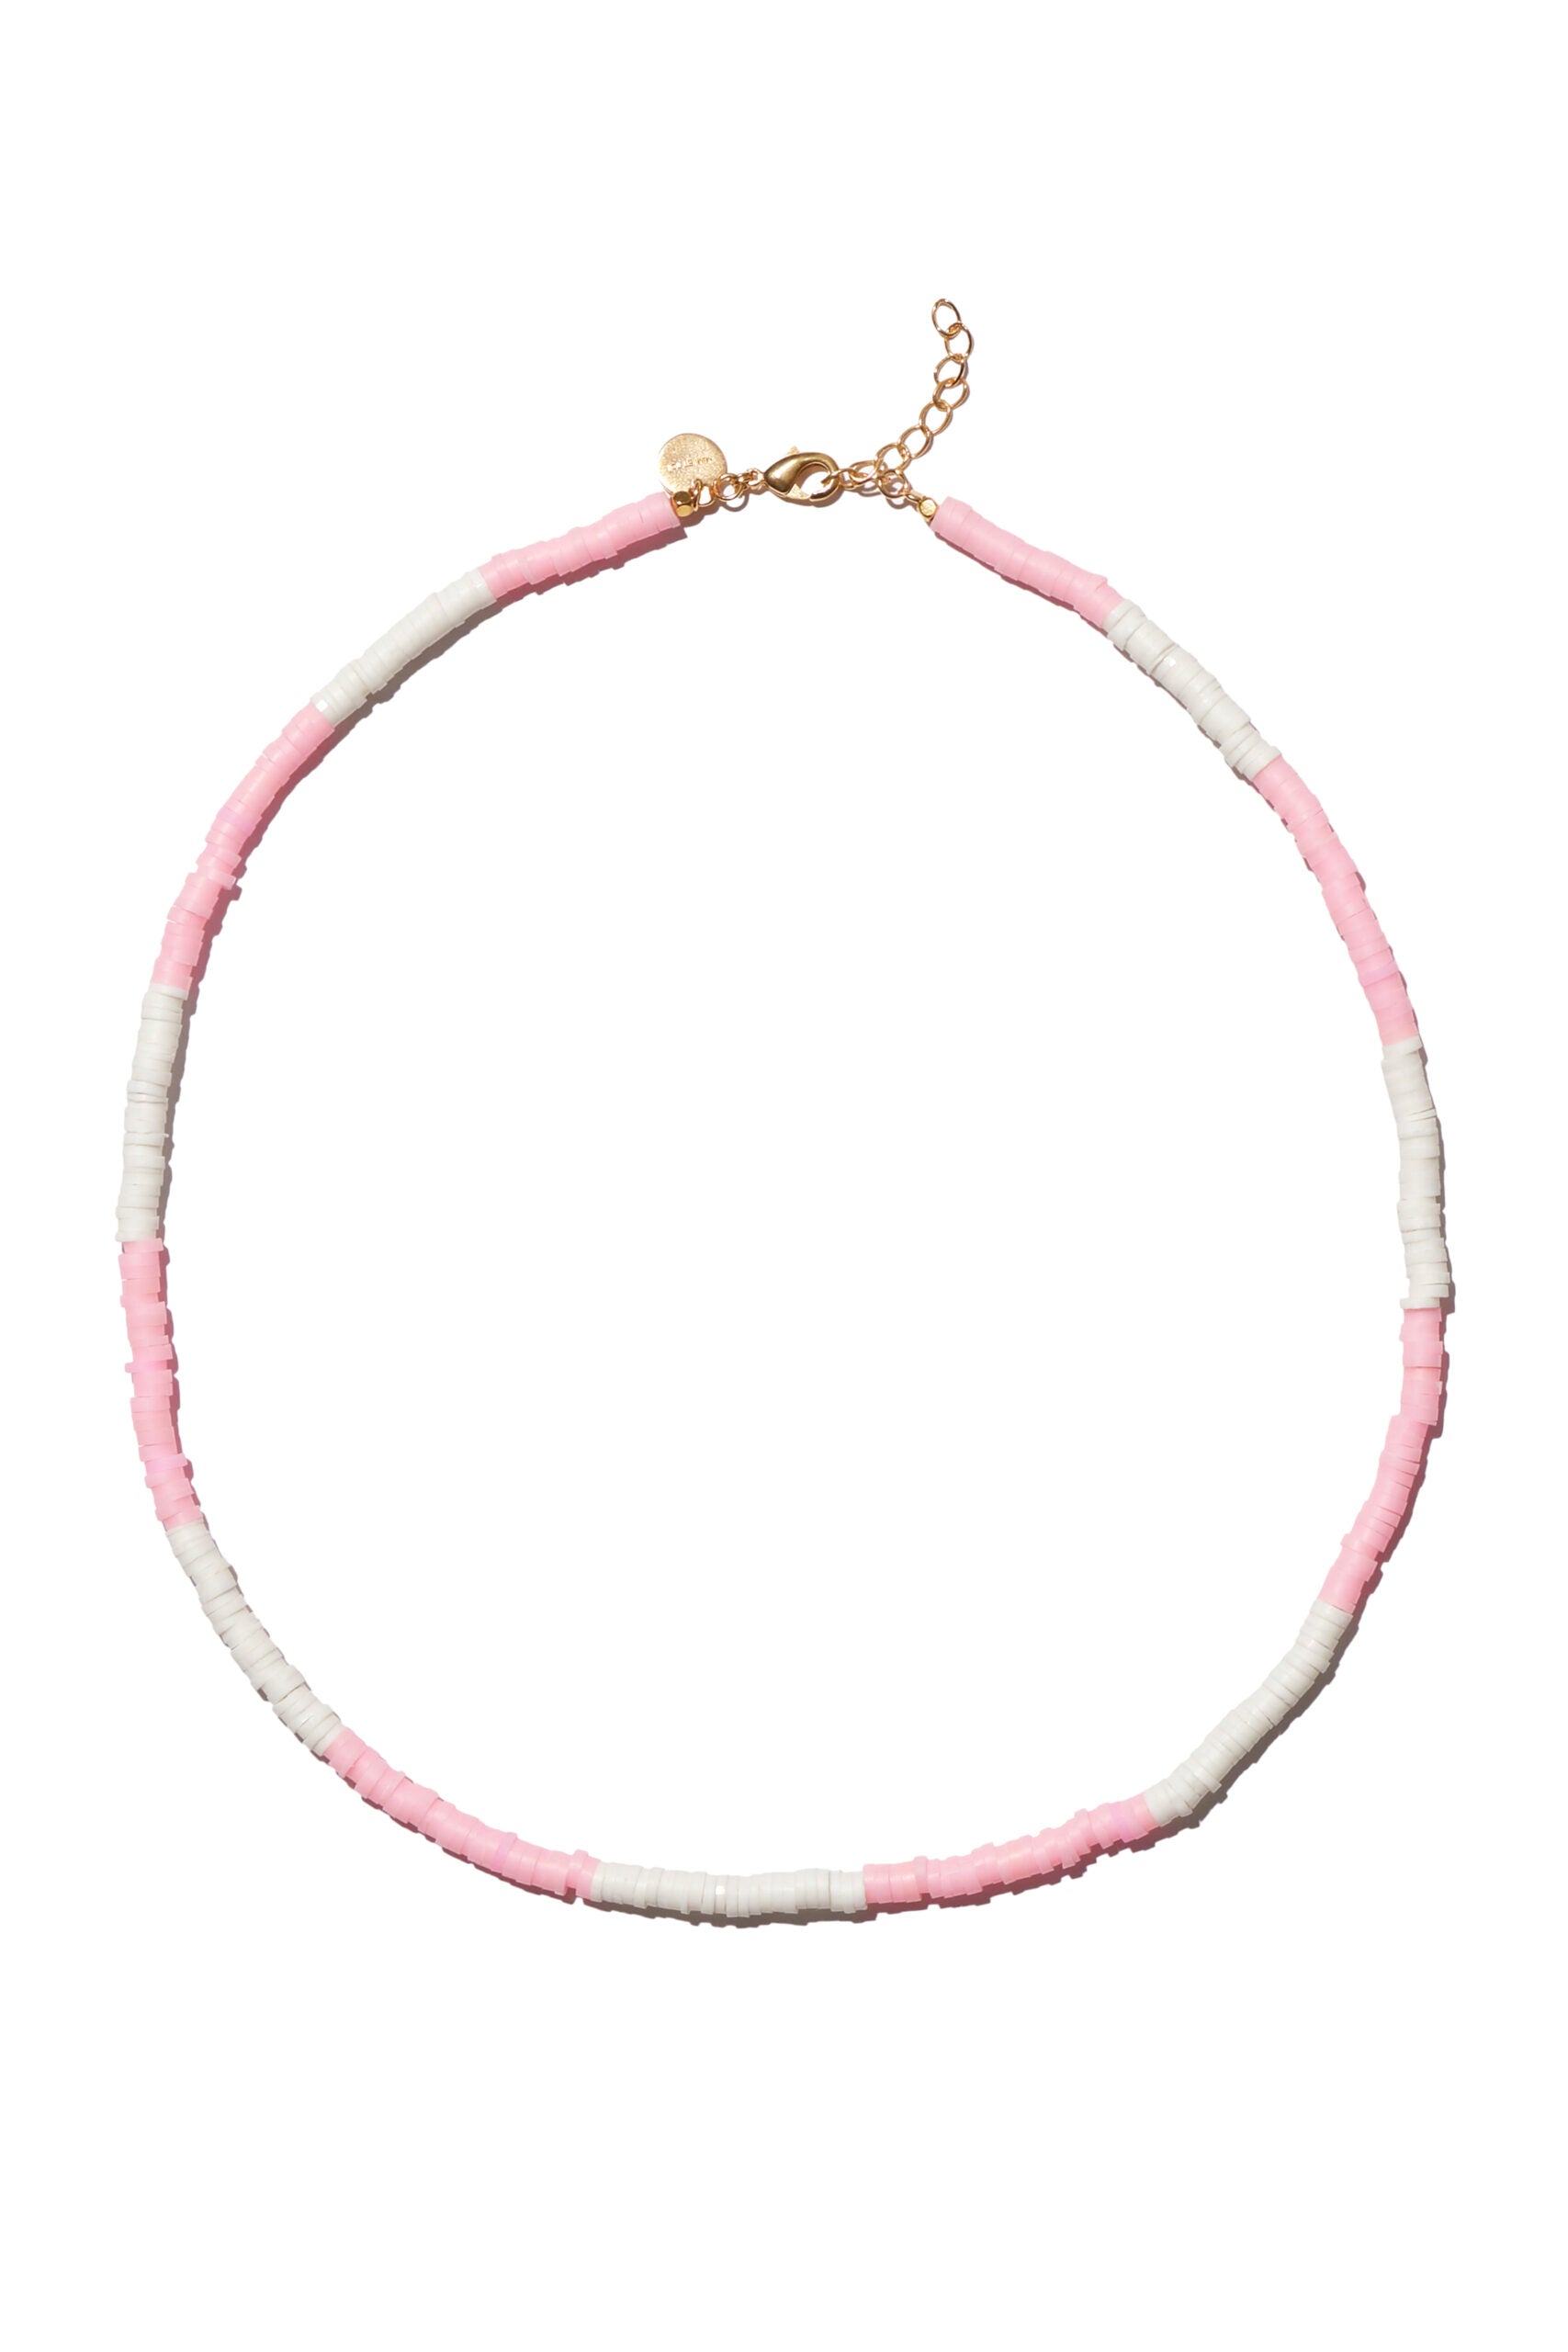 Fleur pink white necklace